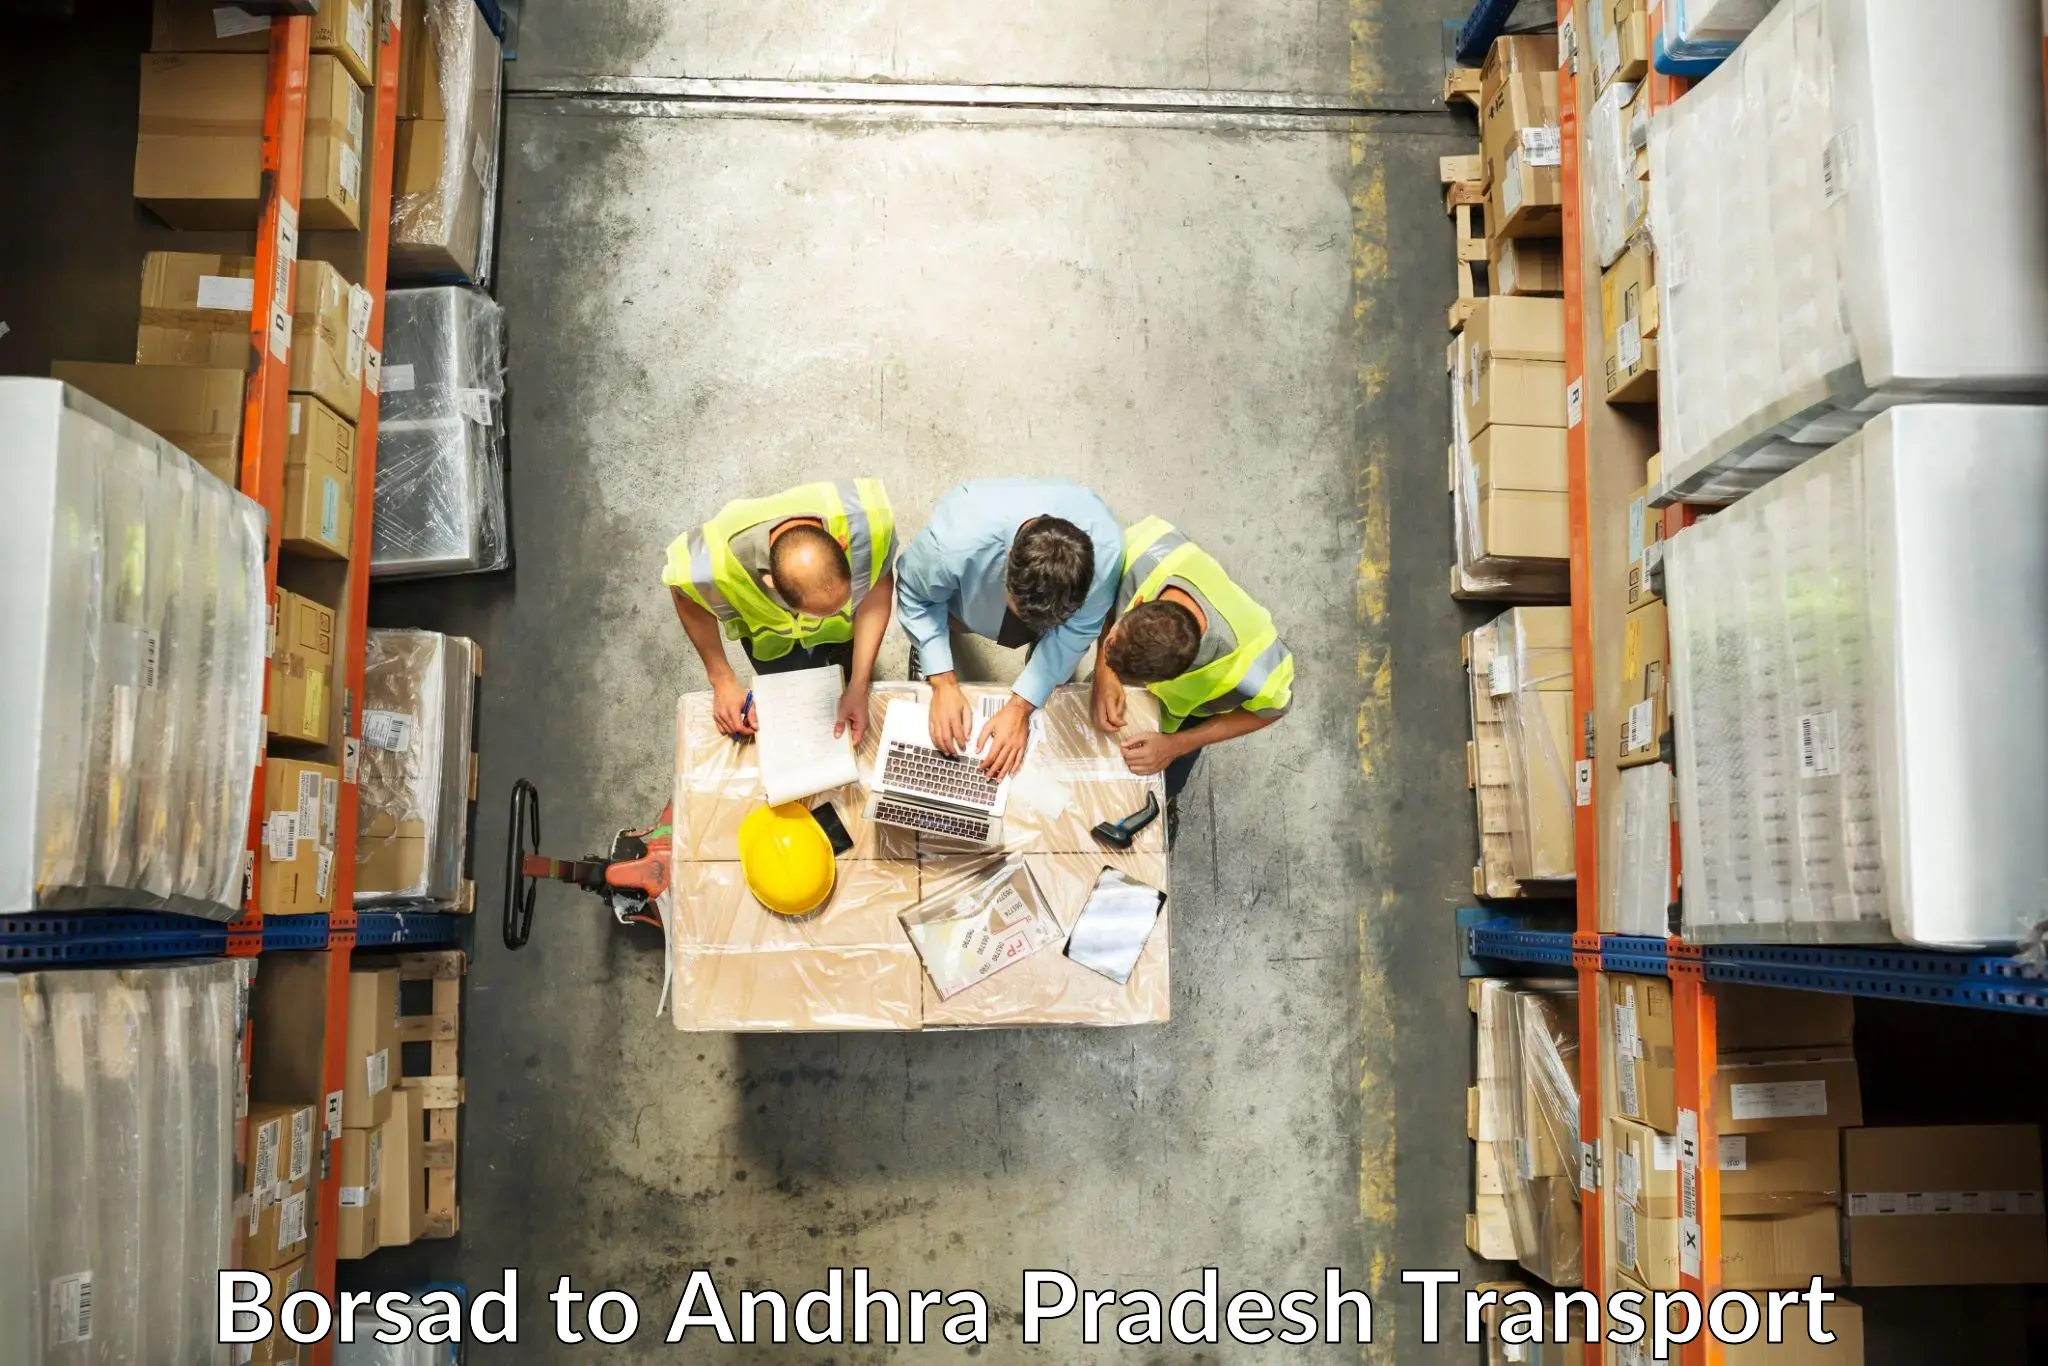 Truck transport companies in India Borsad to Podalakur